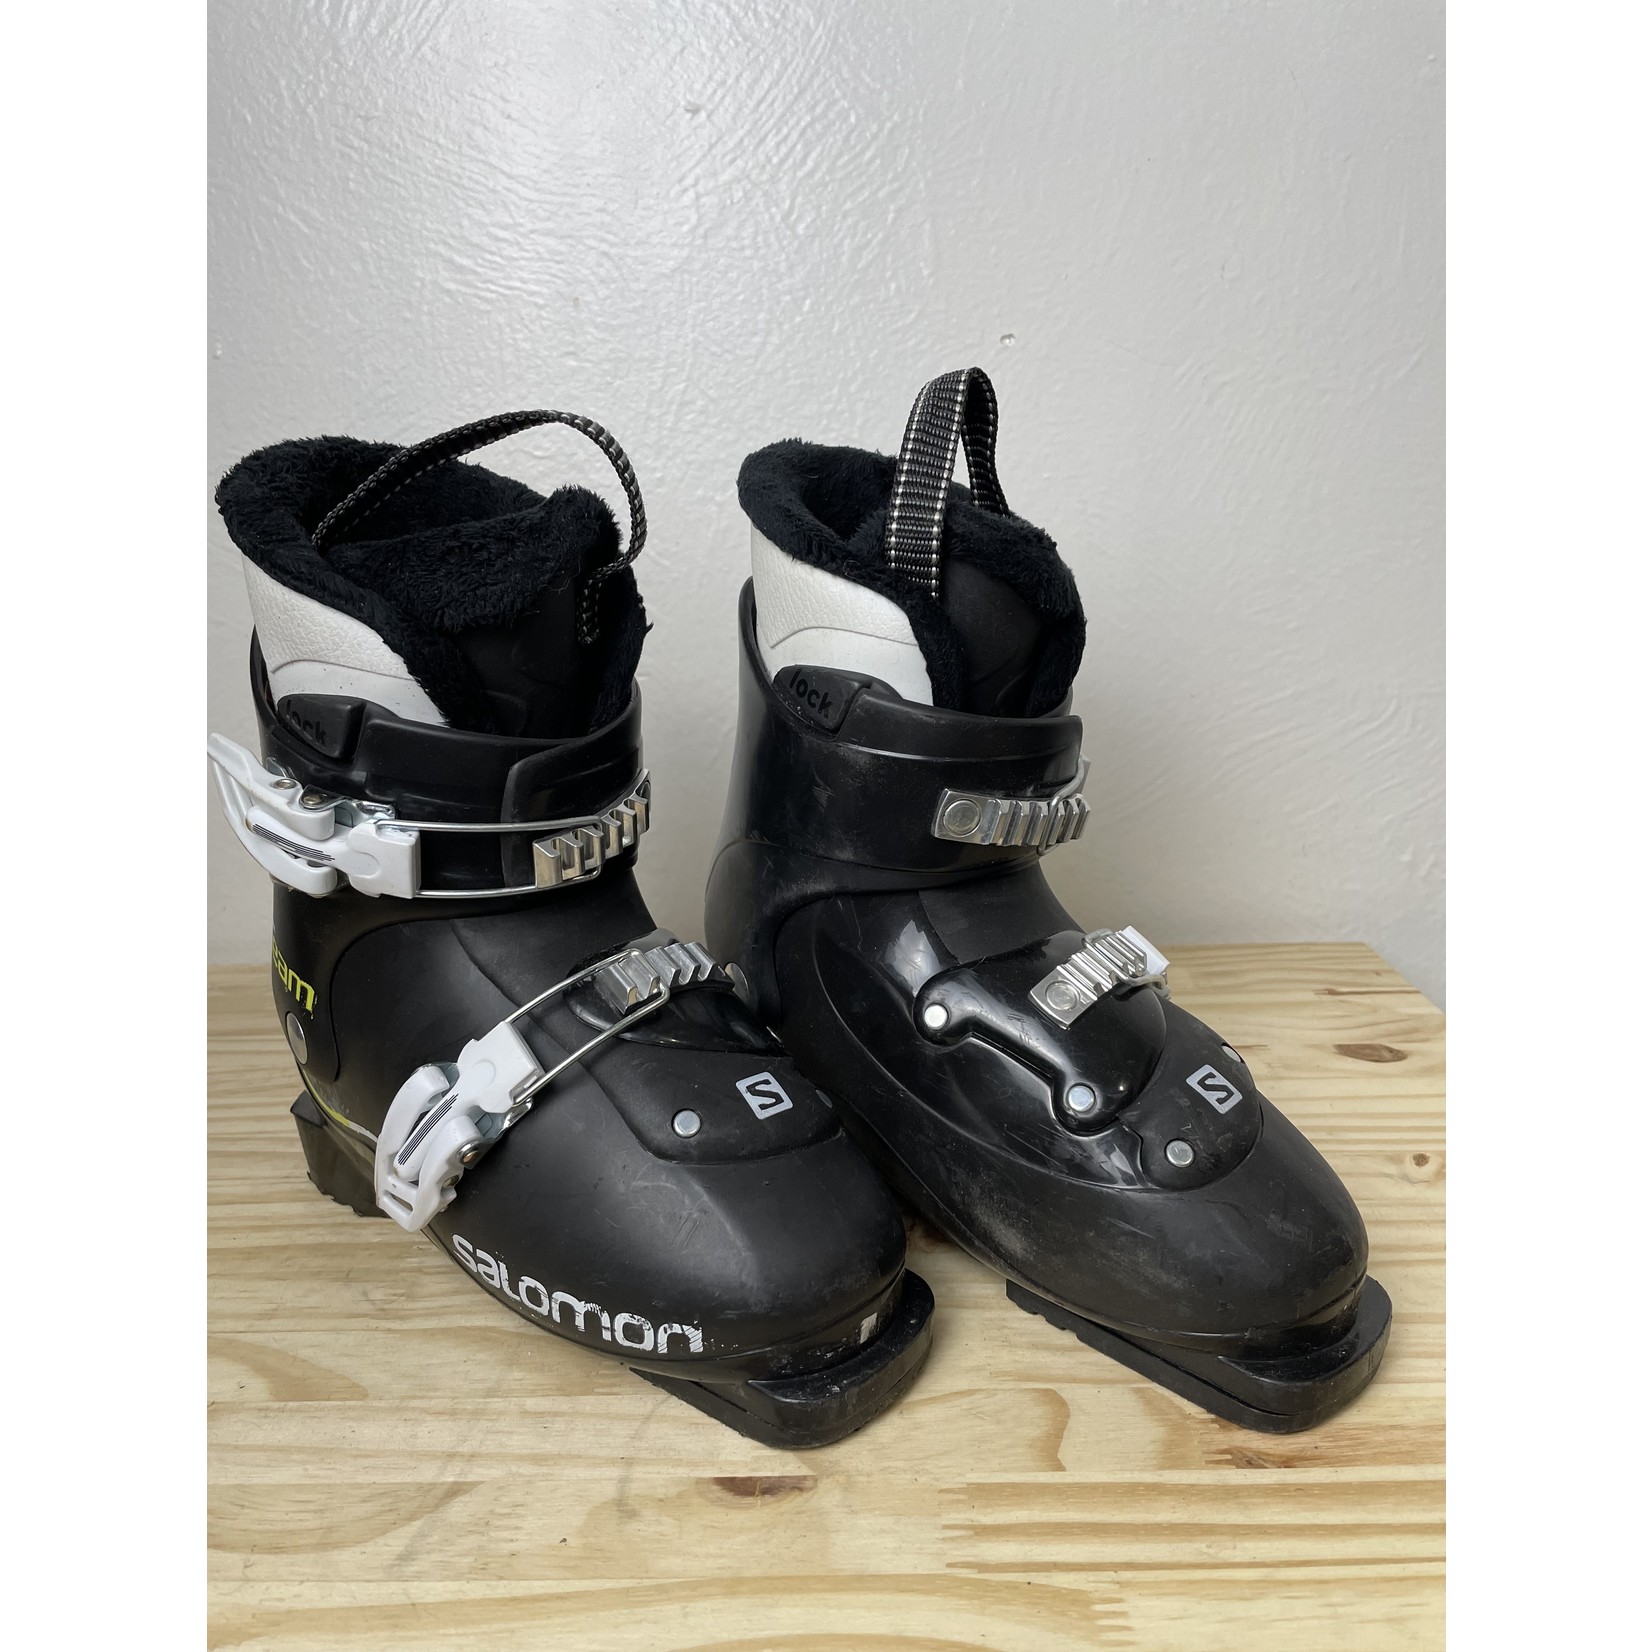 Salomon Salomon Team Kids Ski Boots, Size 20